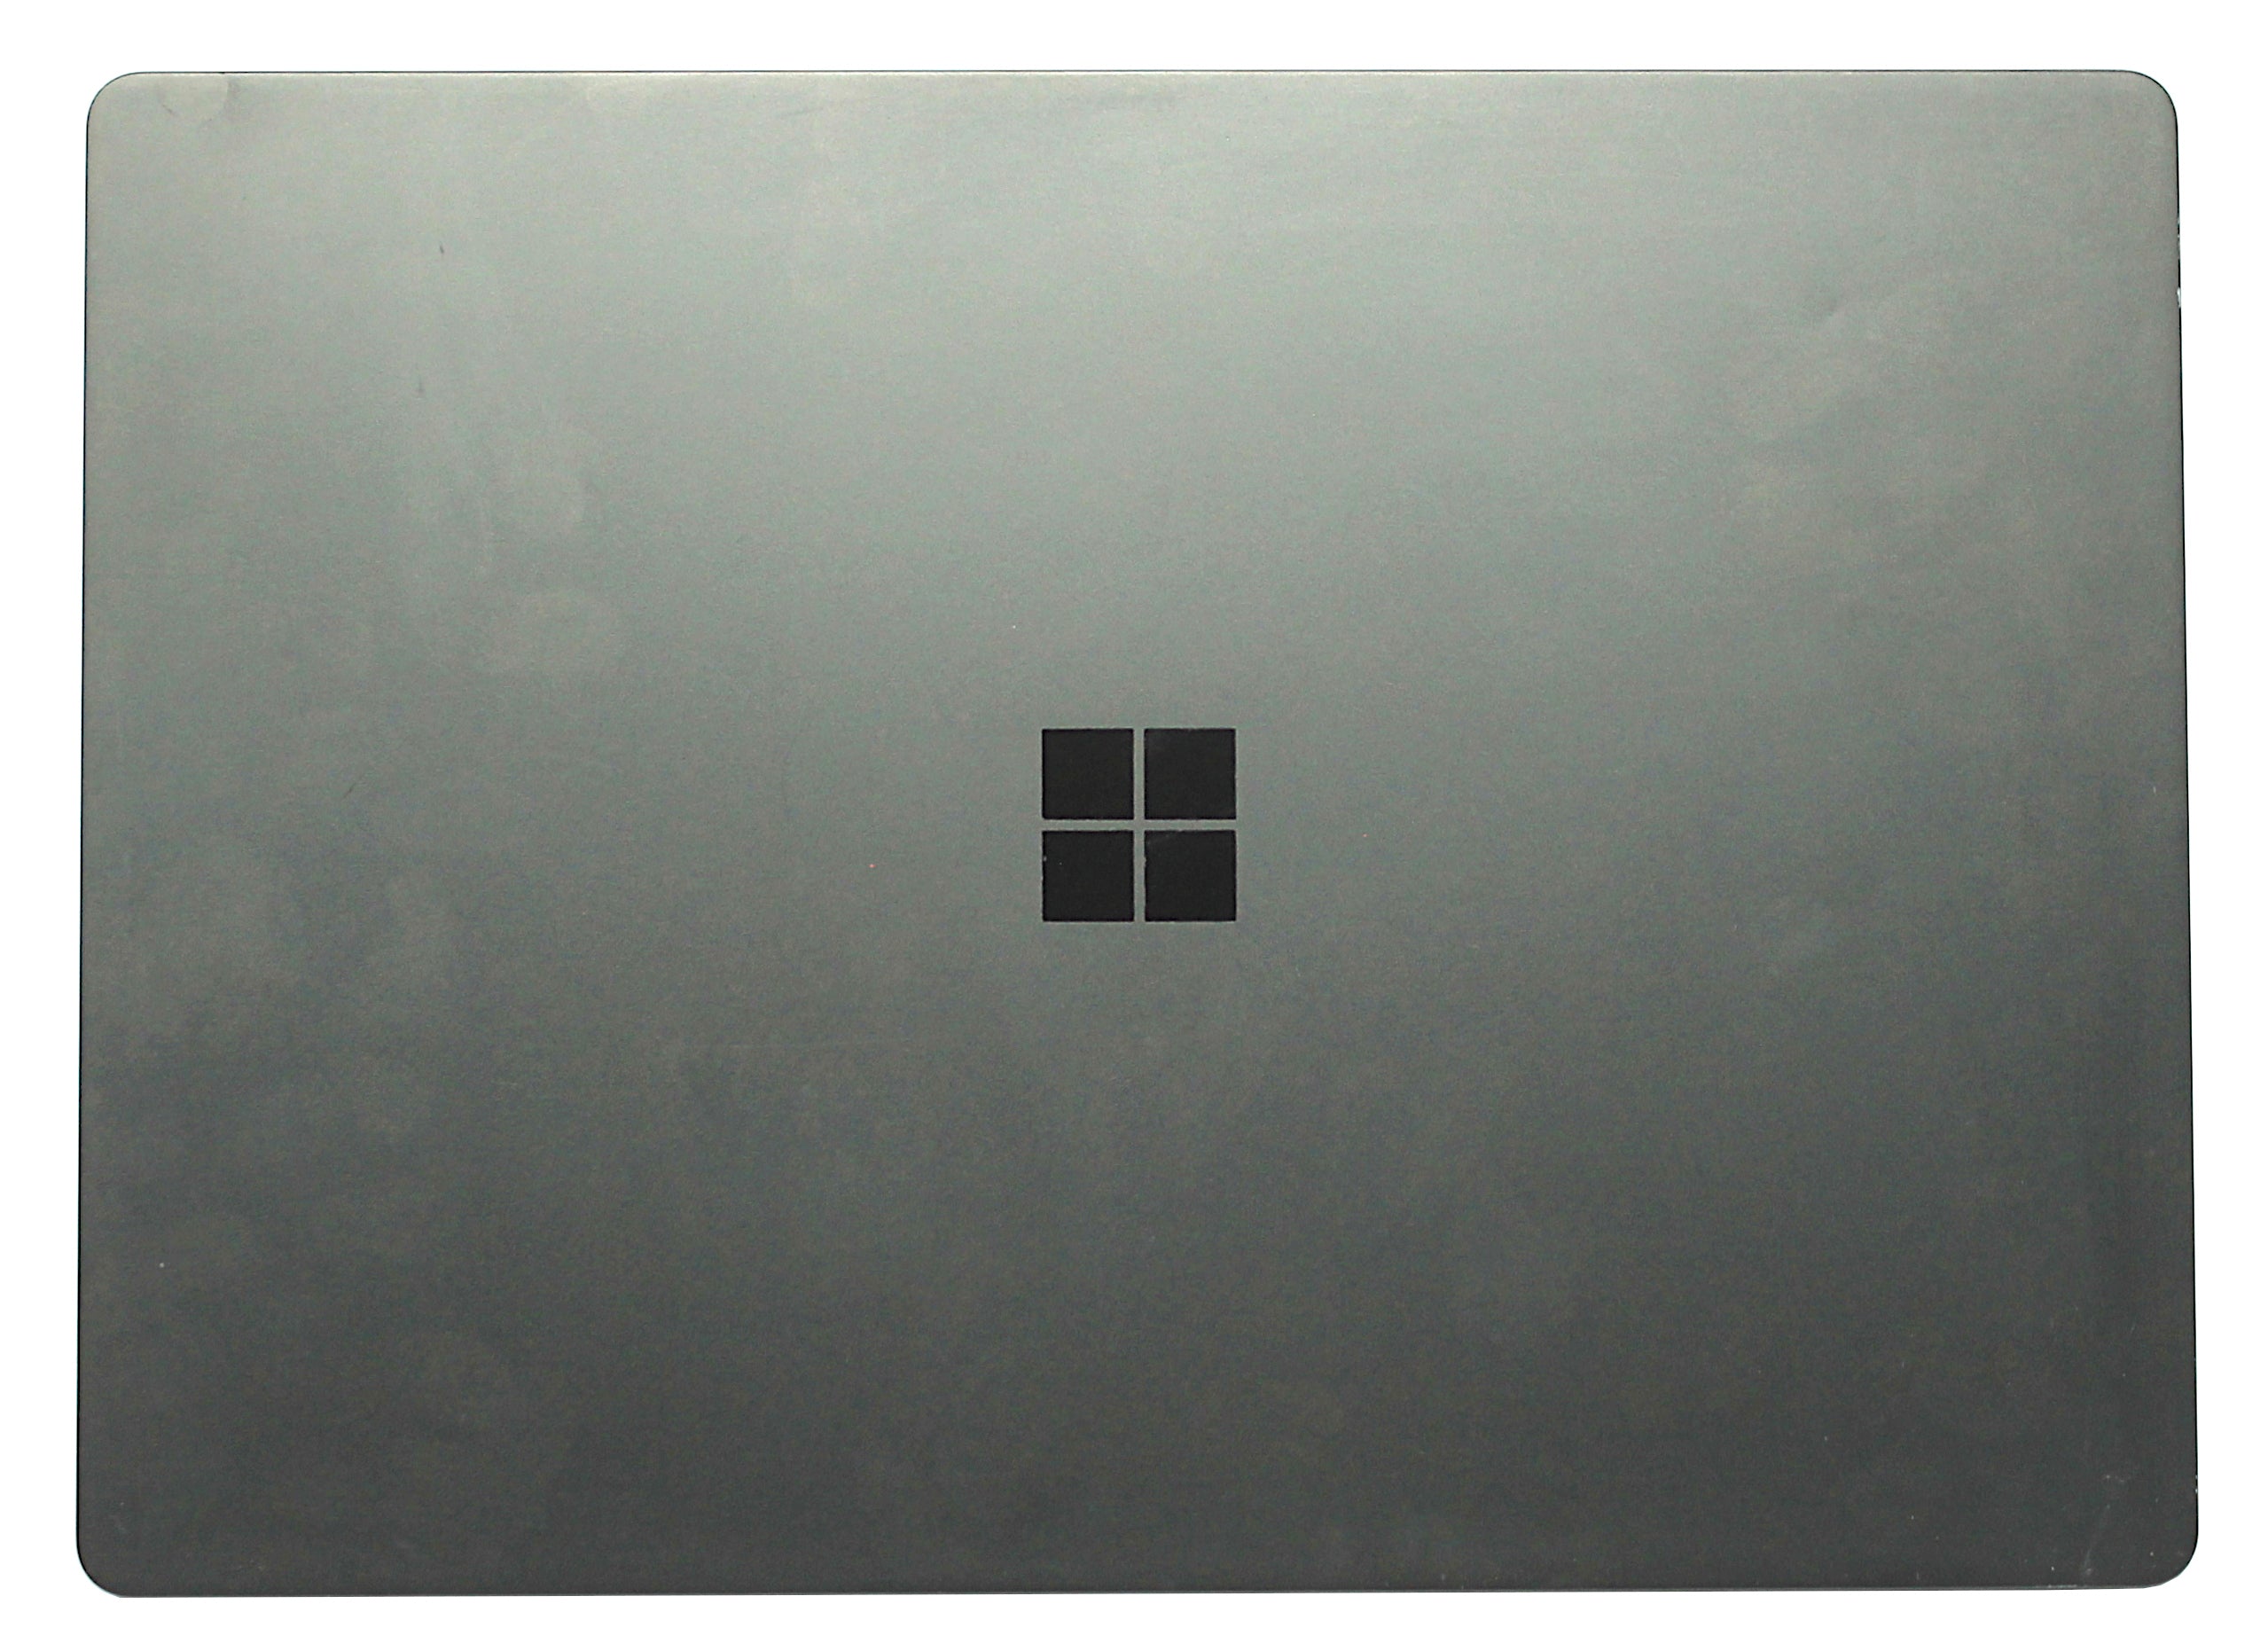 Microsoft Surface Laptop 2, 8th Gen Core i7, 8GB RAM, 256GB eMMC